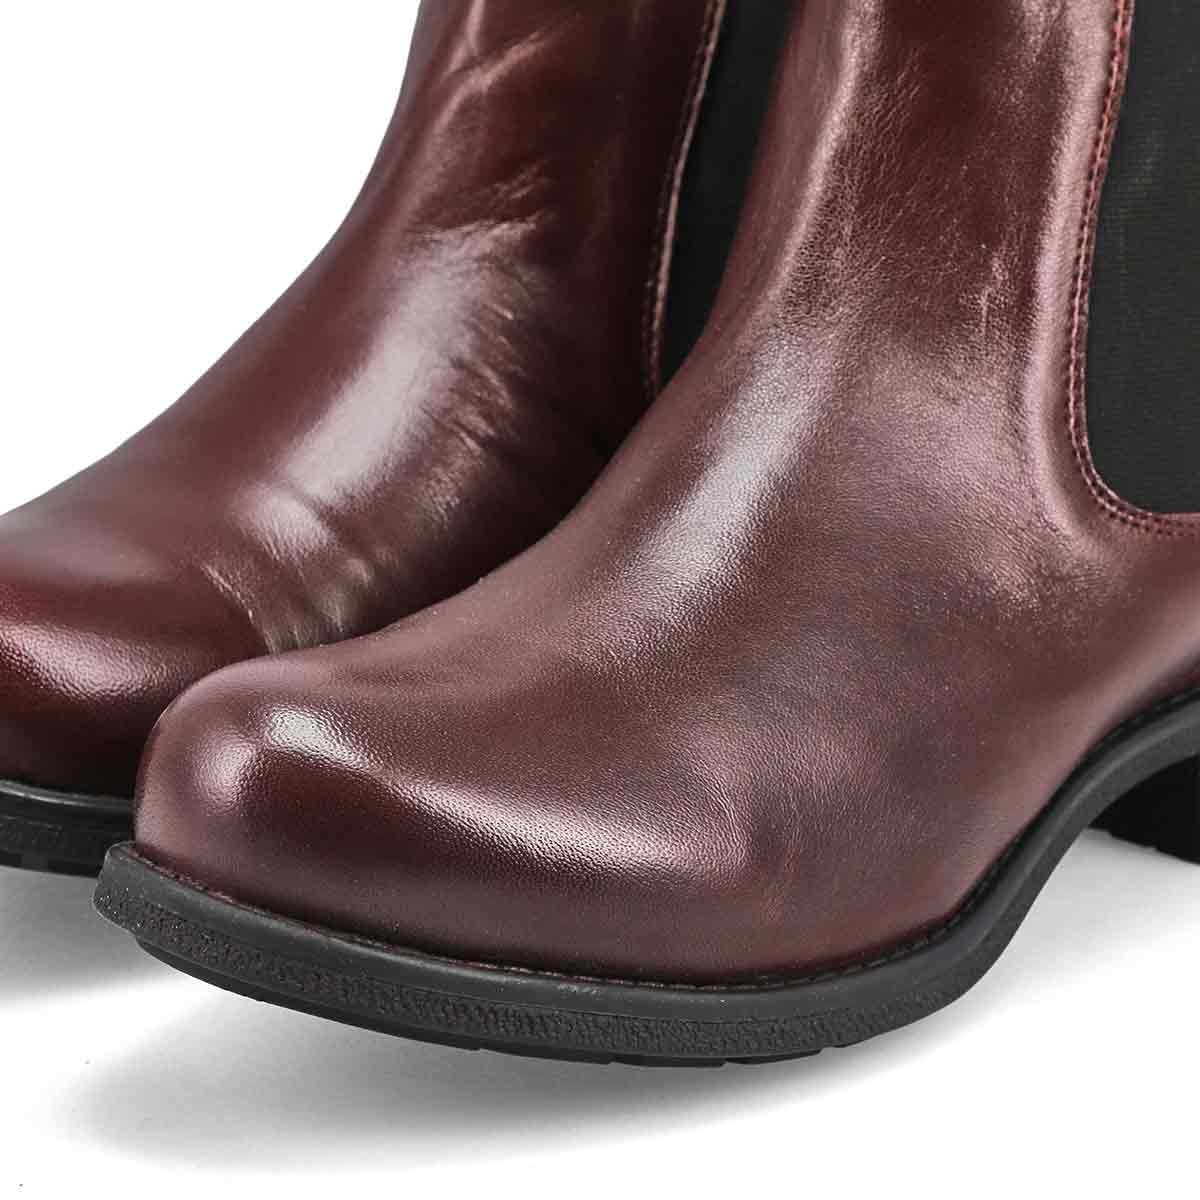 Women's Darilyn 2 Leather Chelsea Boot - Burgundy